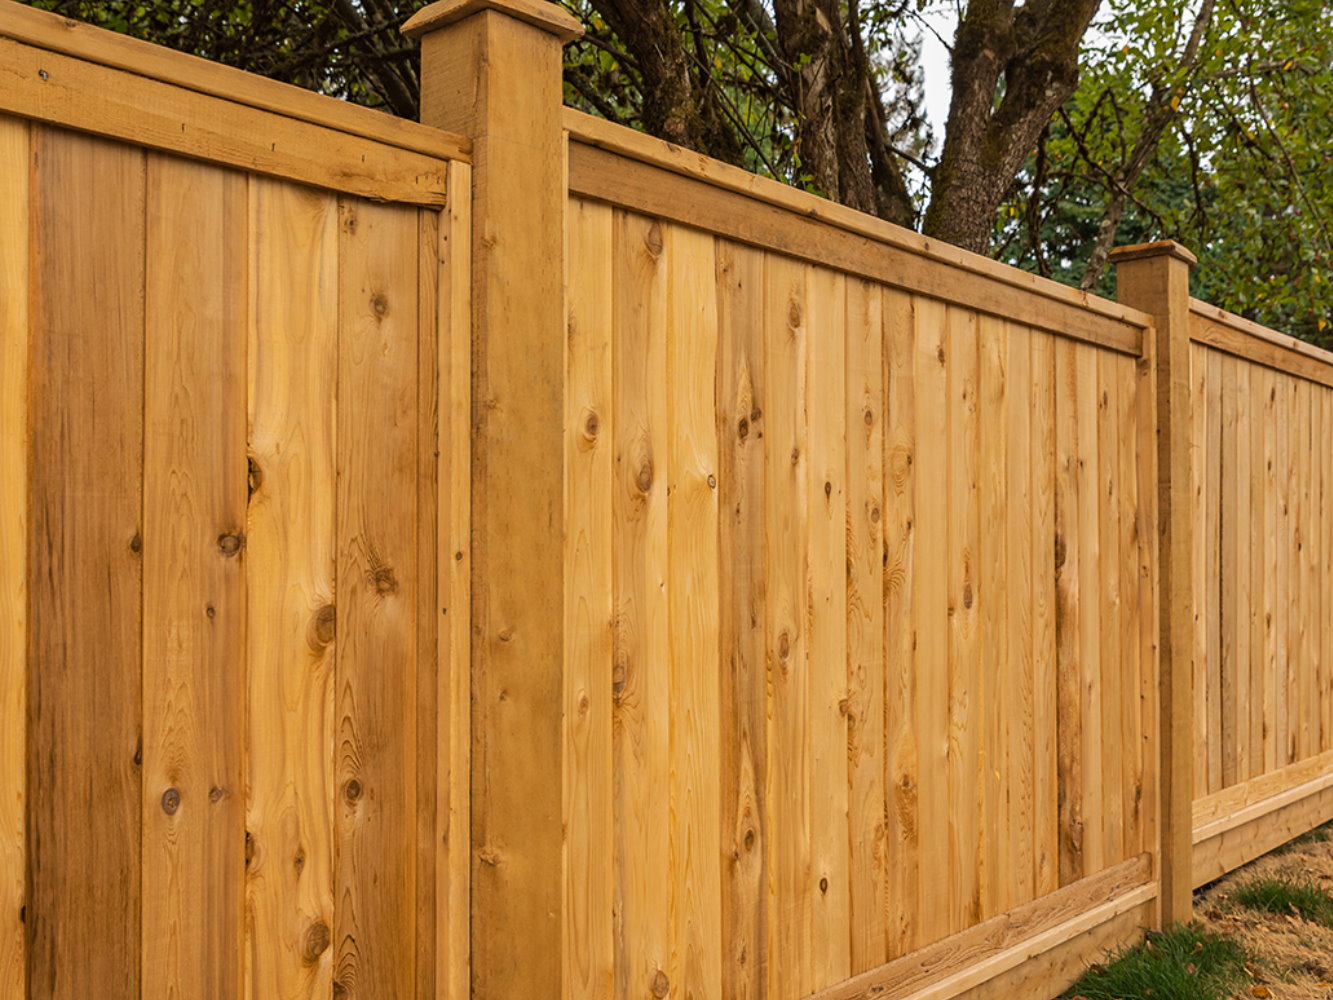 Valdosta GA cap and trim style wood fence